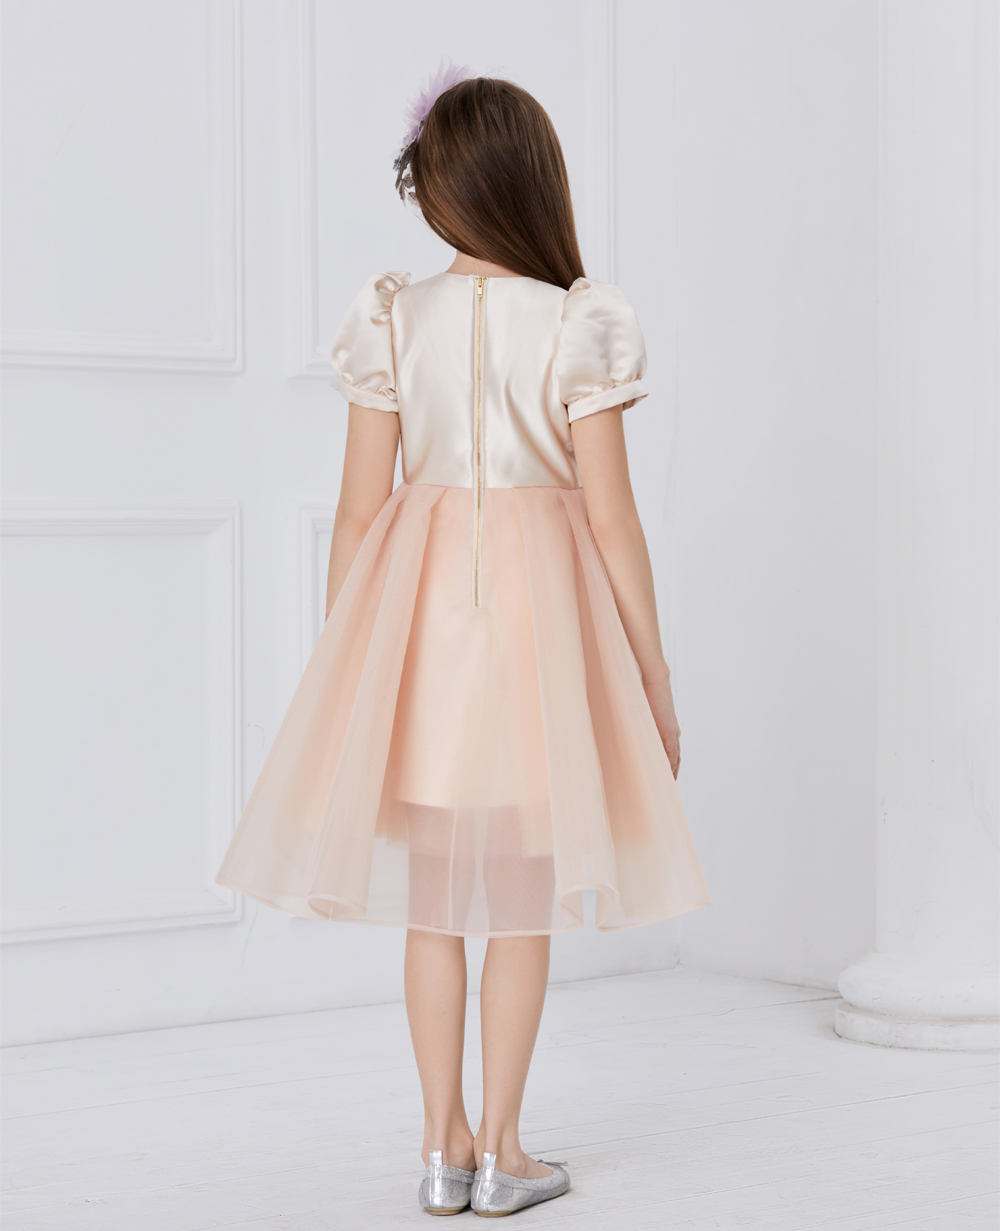 Princess Peach short sleeve tuelle dress